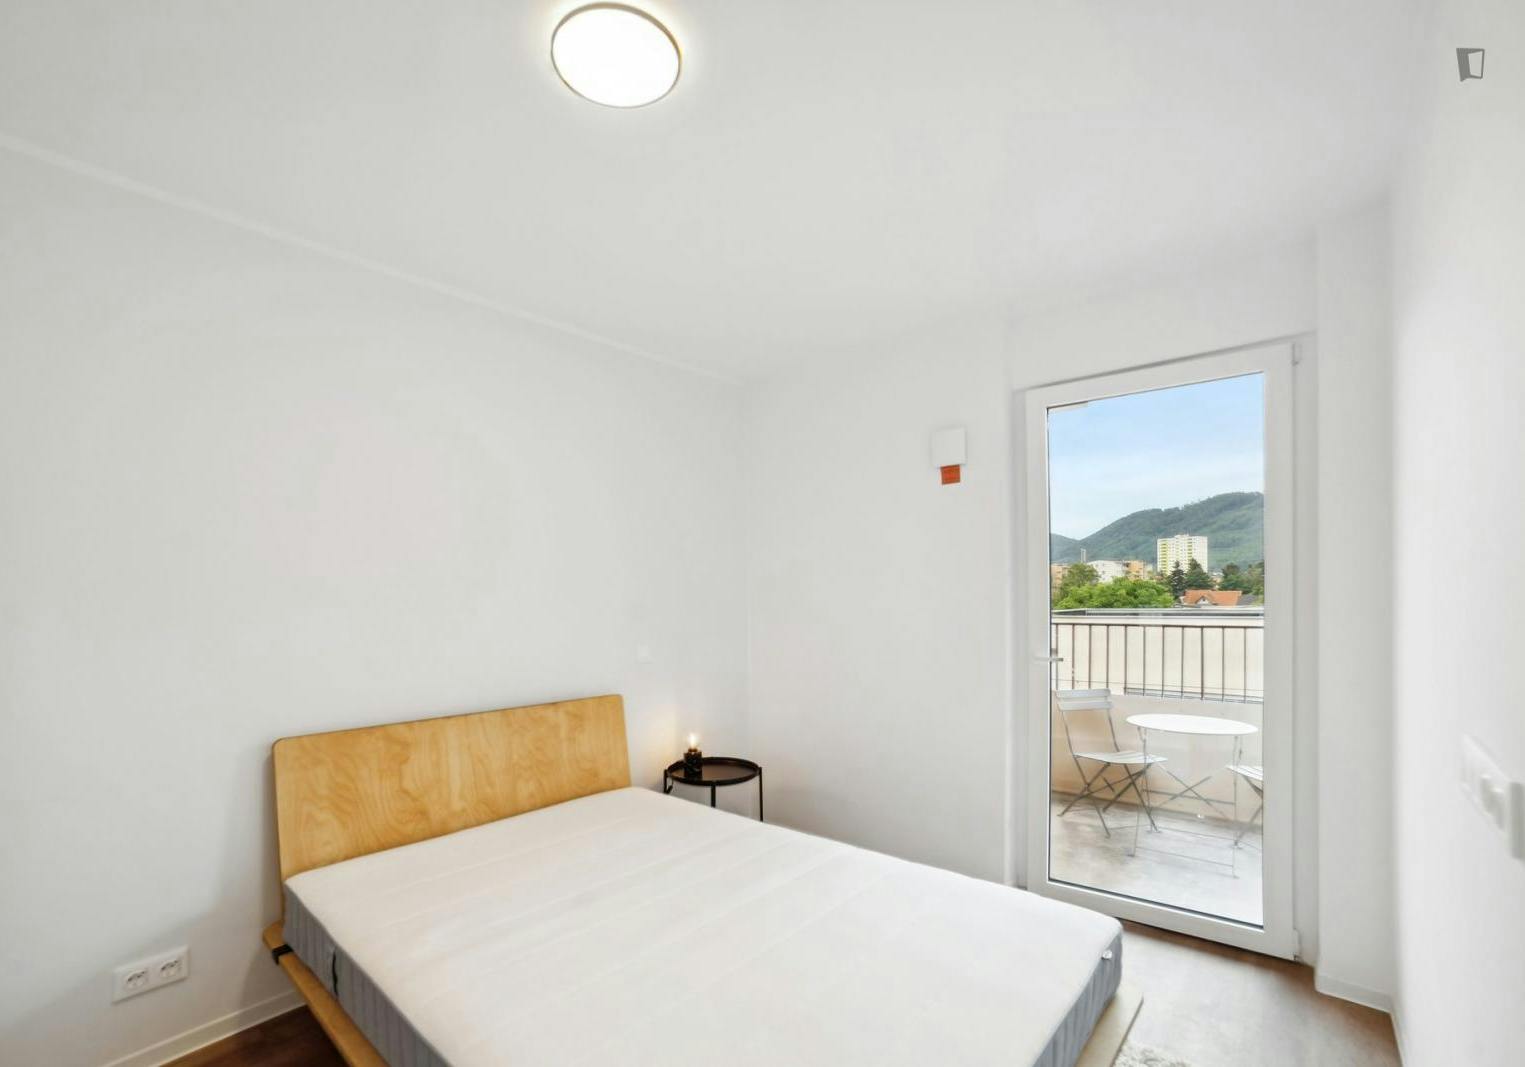 Alluring 1-bedroom flat in Lend